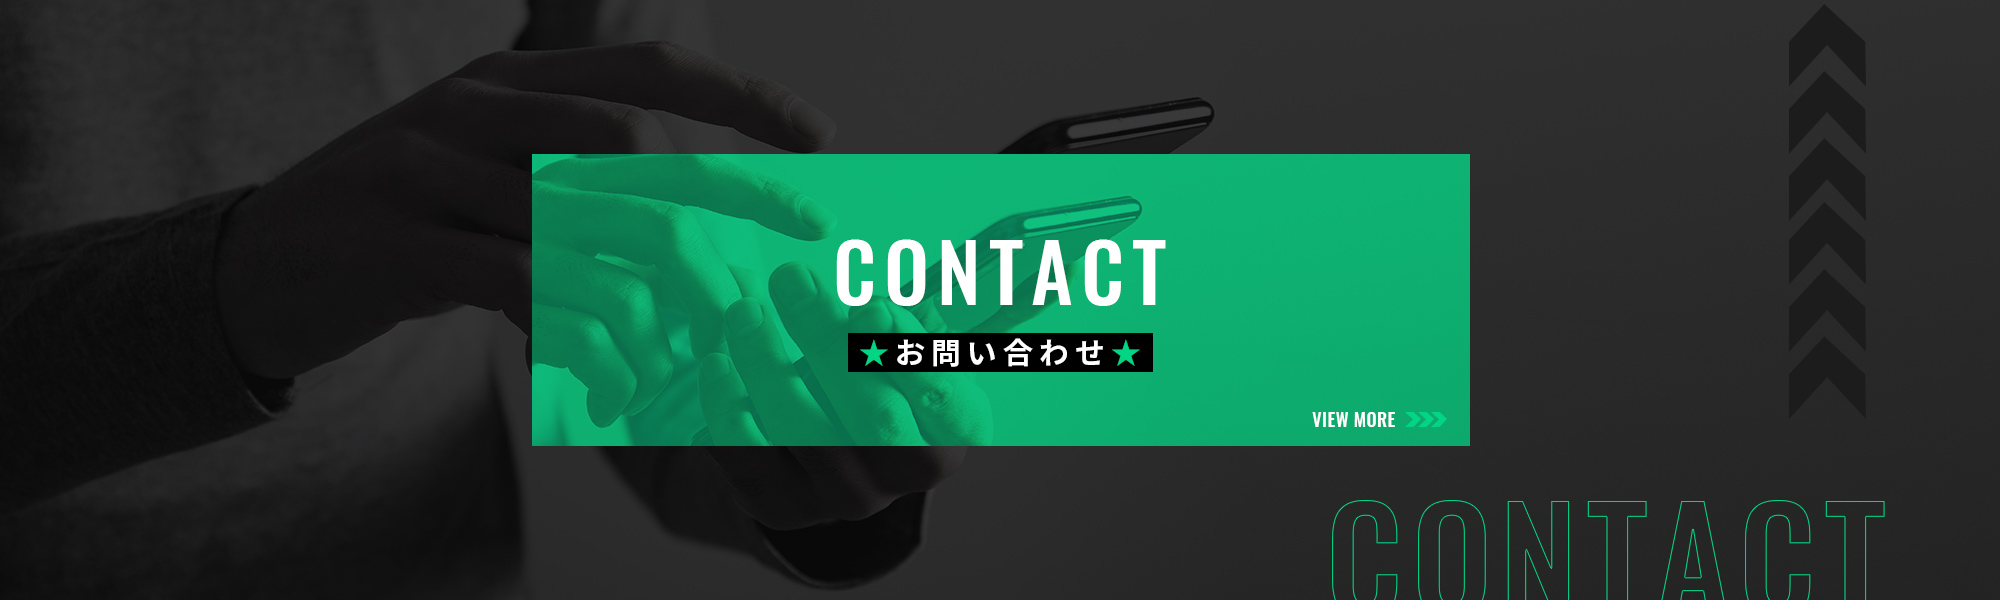 banner_contact_def